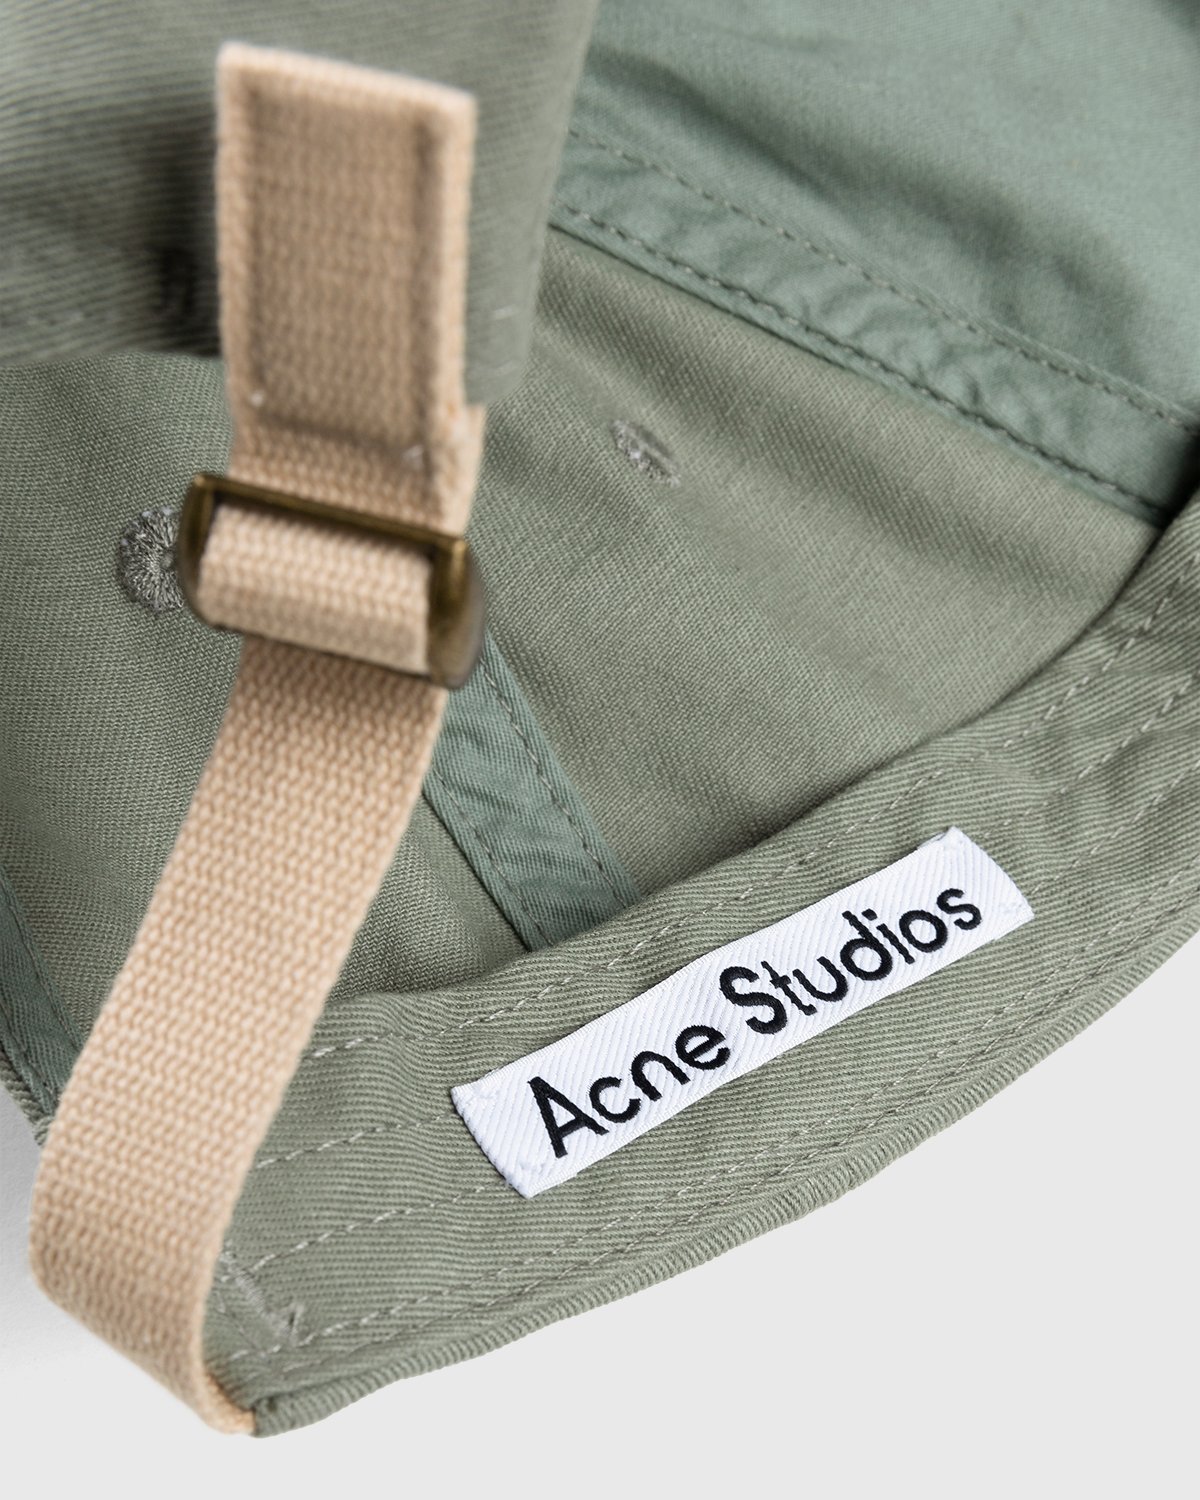 Acne Studios - Cotton Baseball Cap Sage Green - Accessories - Green - Image 6